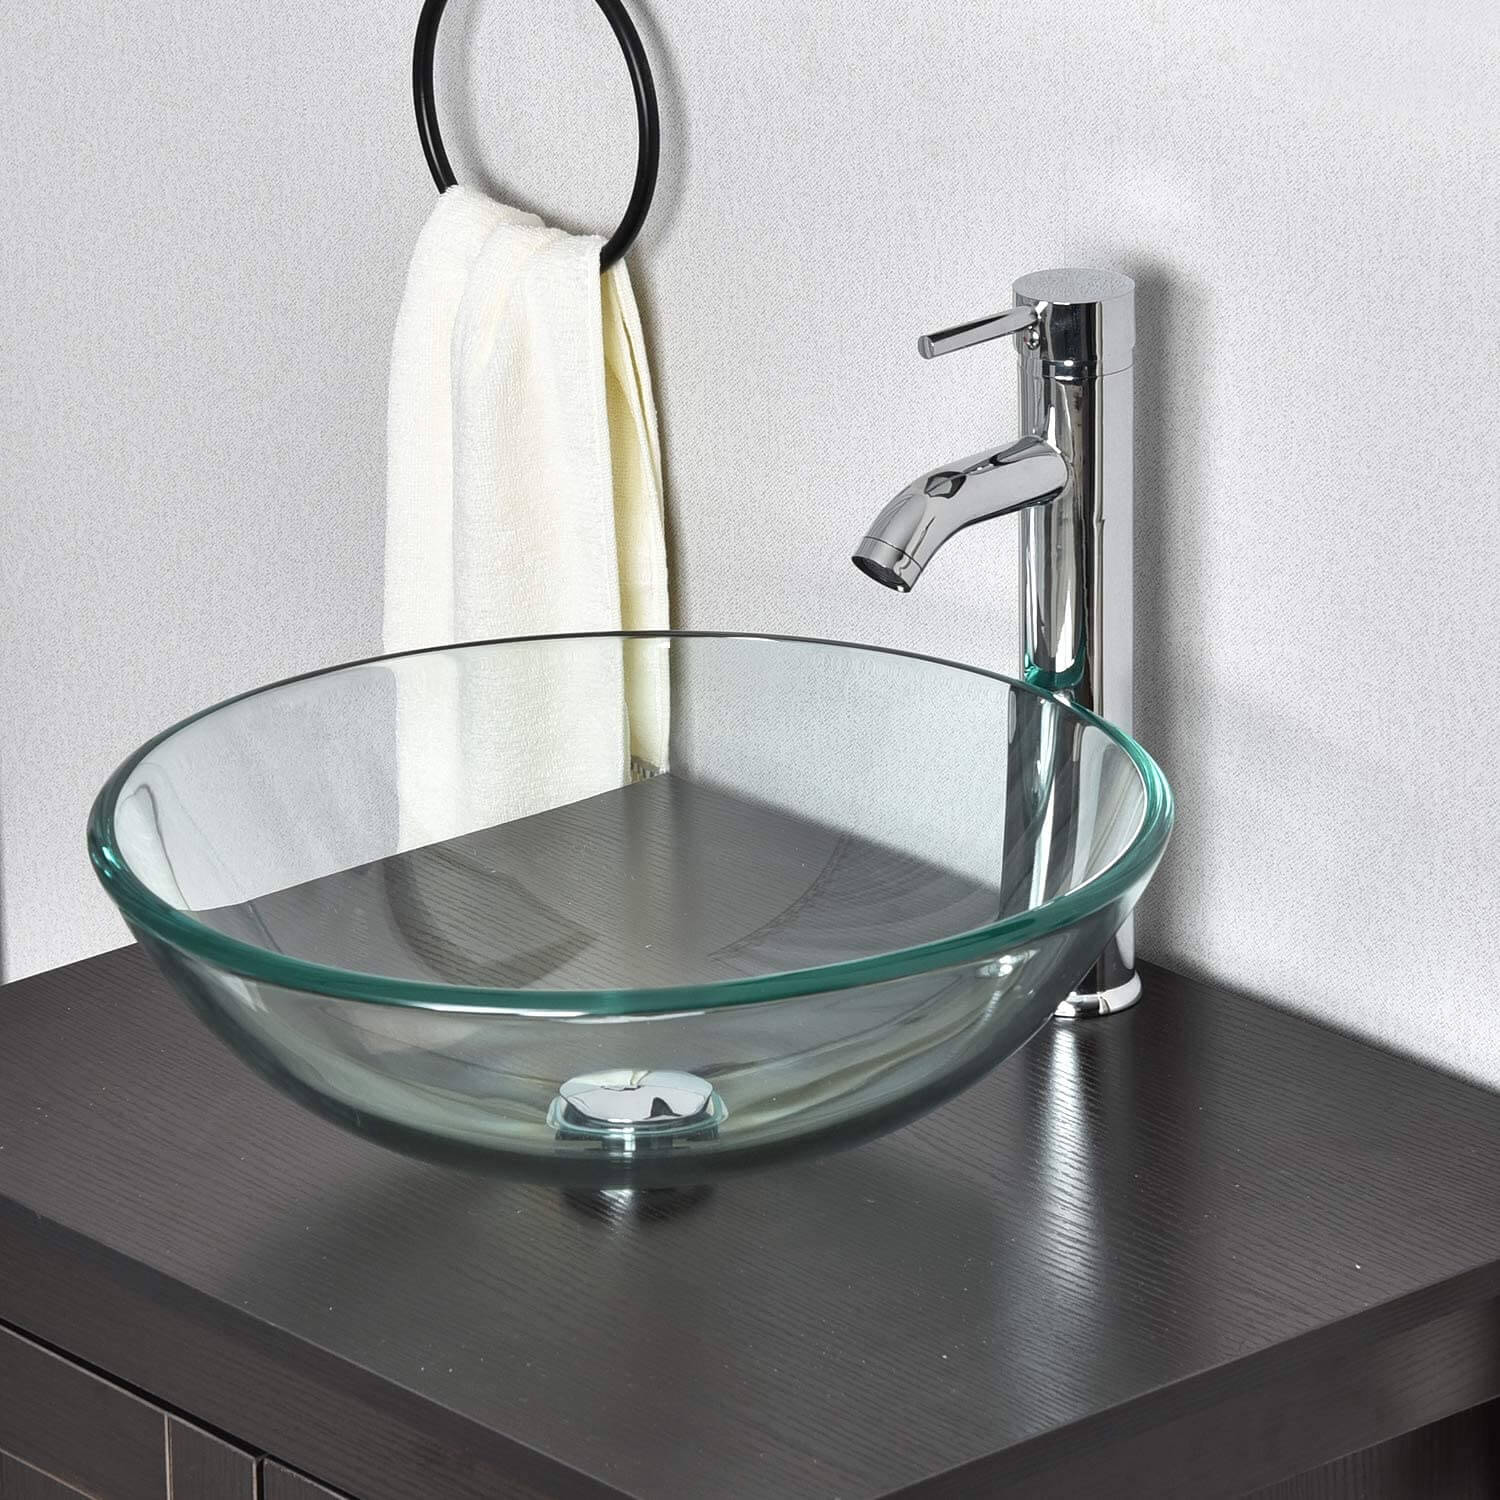 Elecwish clear glass sink display scene